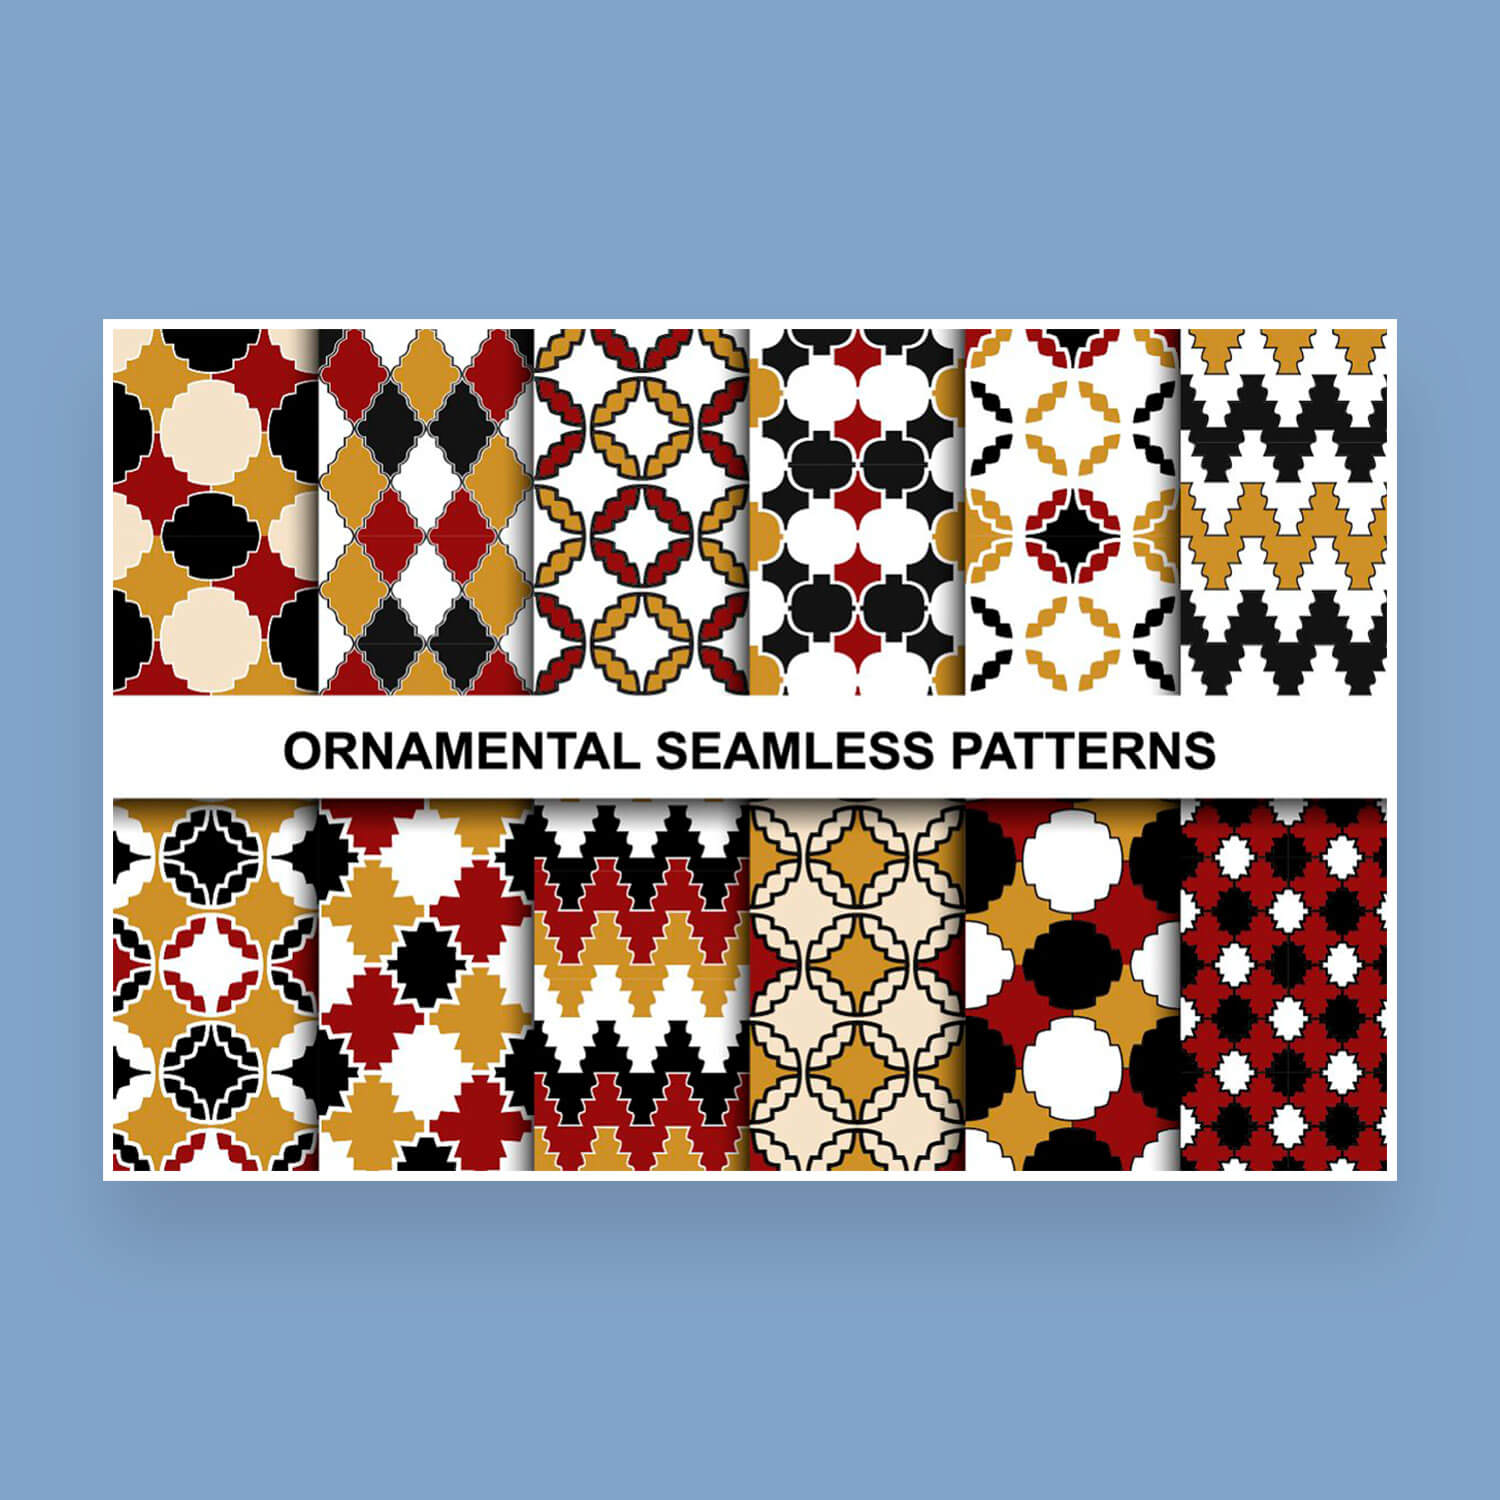 Seamless ornamental patterns, twelve patterns in brown, red, black, white colors.